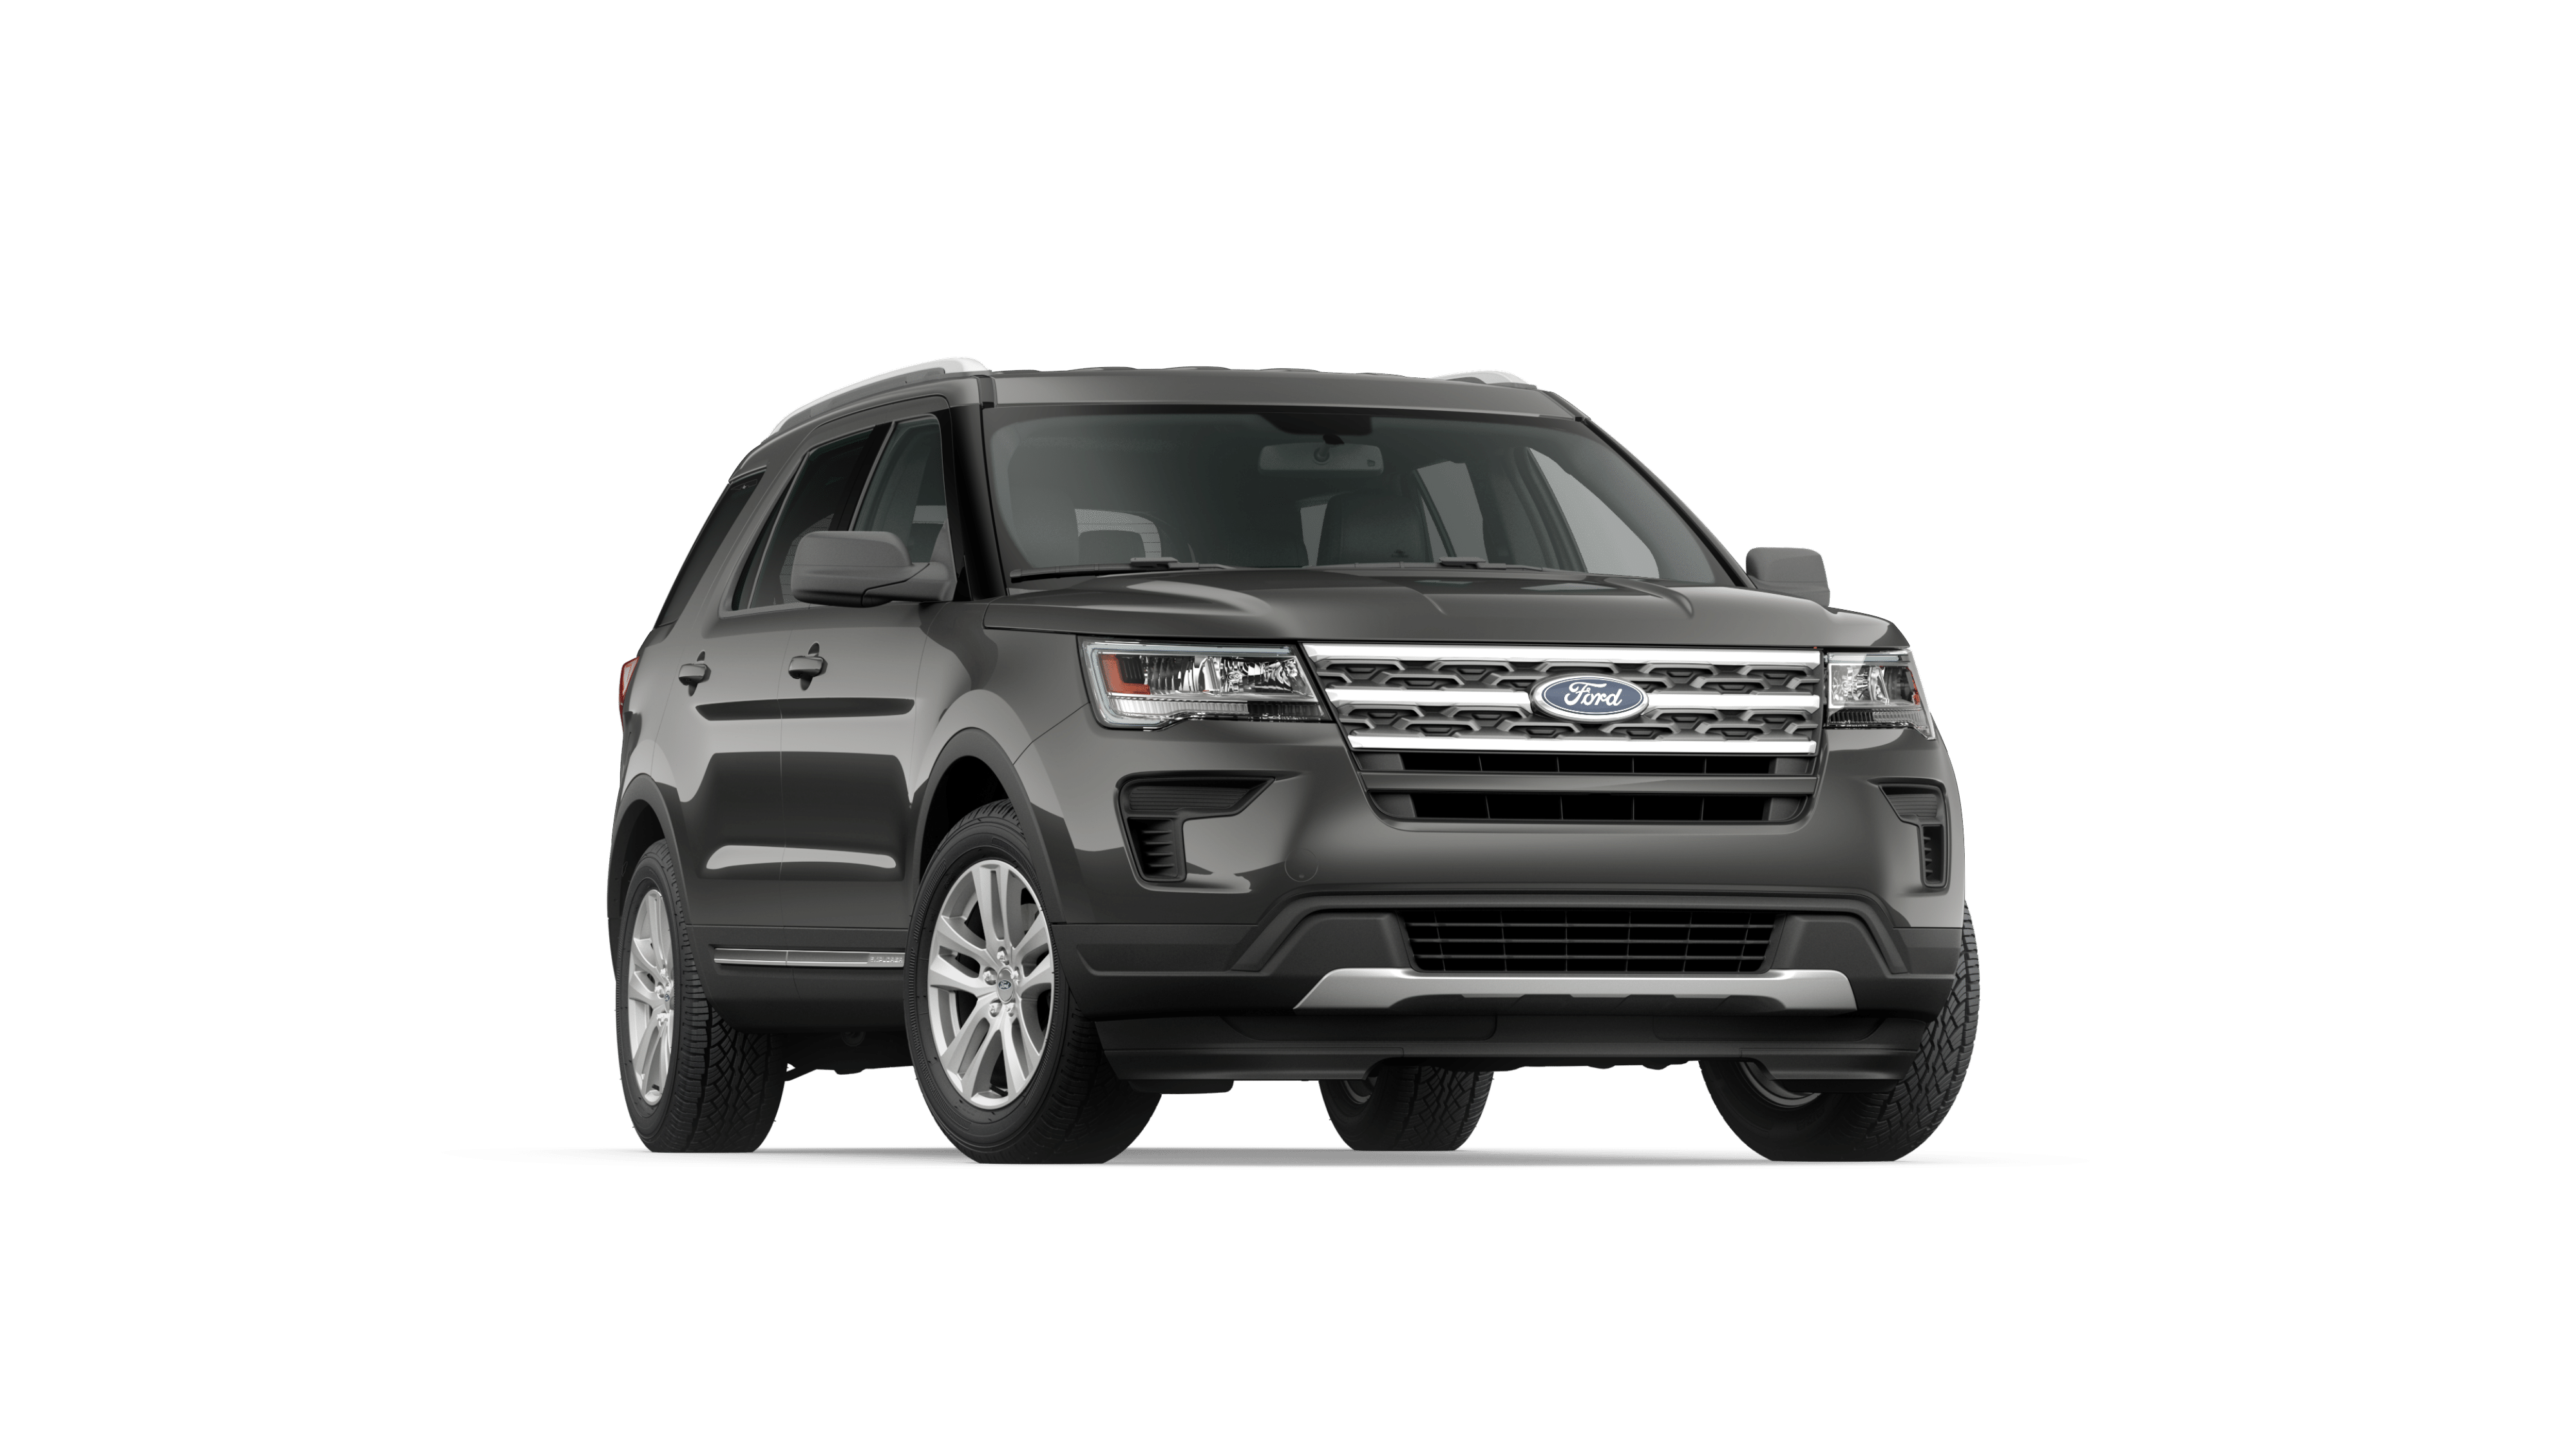 2019 Ford Explorer for sale in Elizabethtown - 1FM5K8D8XKGA20647 2019 Ford Explorer Xlt 4wd Towing Capacity